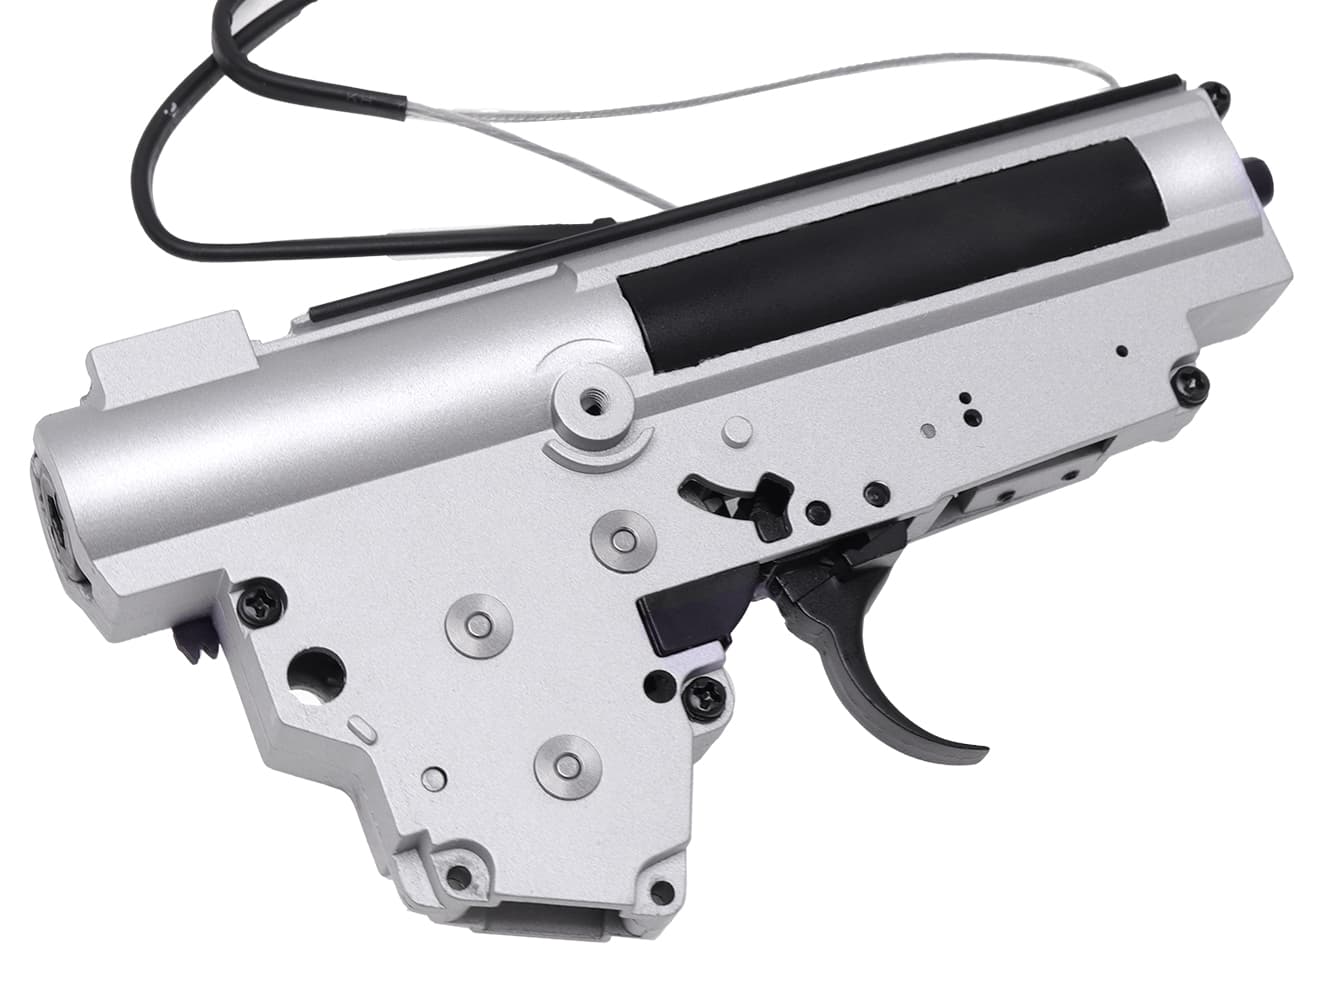 ZC LEOPARD V3 QD スタンダード メカボックスCOMP 8mm 前方配線/マイクロスイッチ for AEG AK